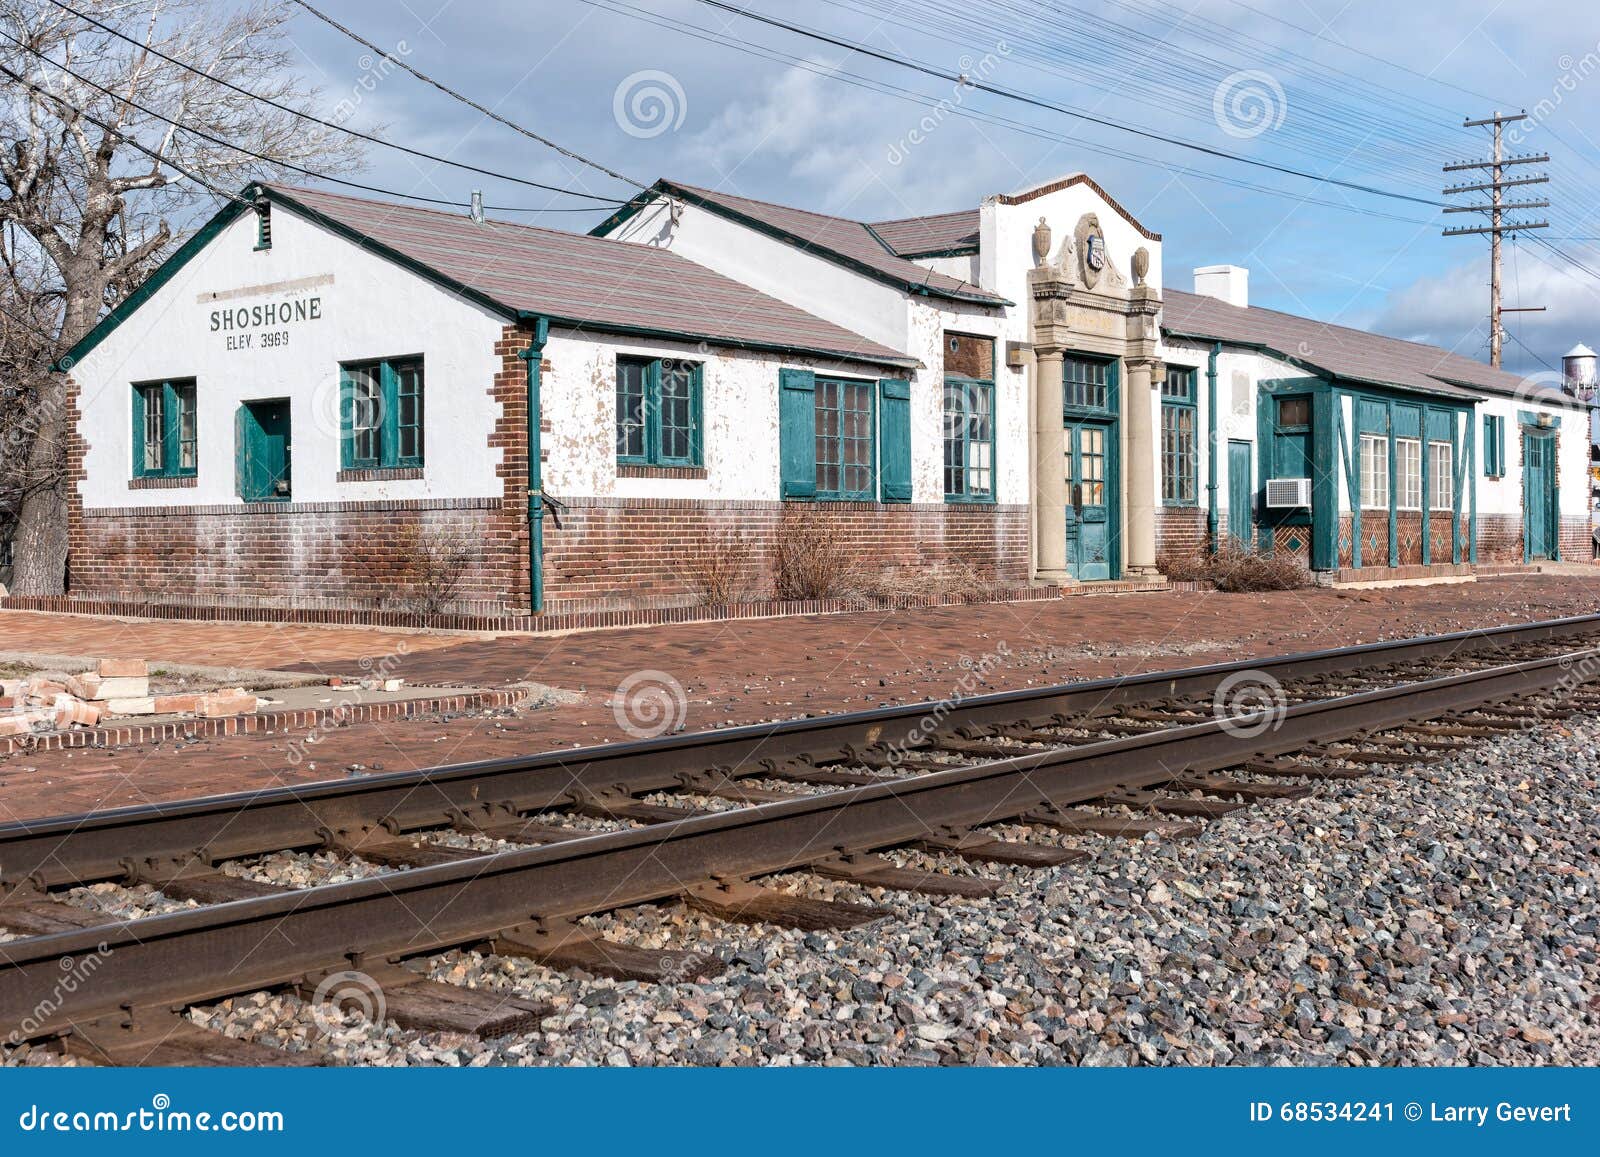 old shoshone, idaho railroad station